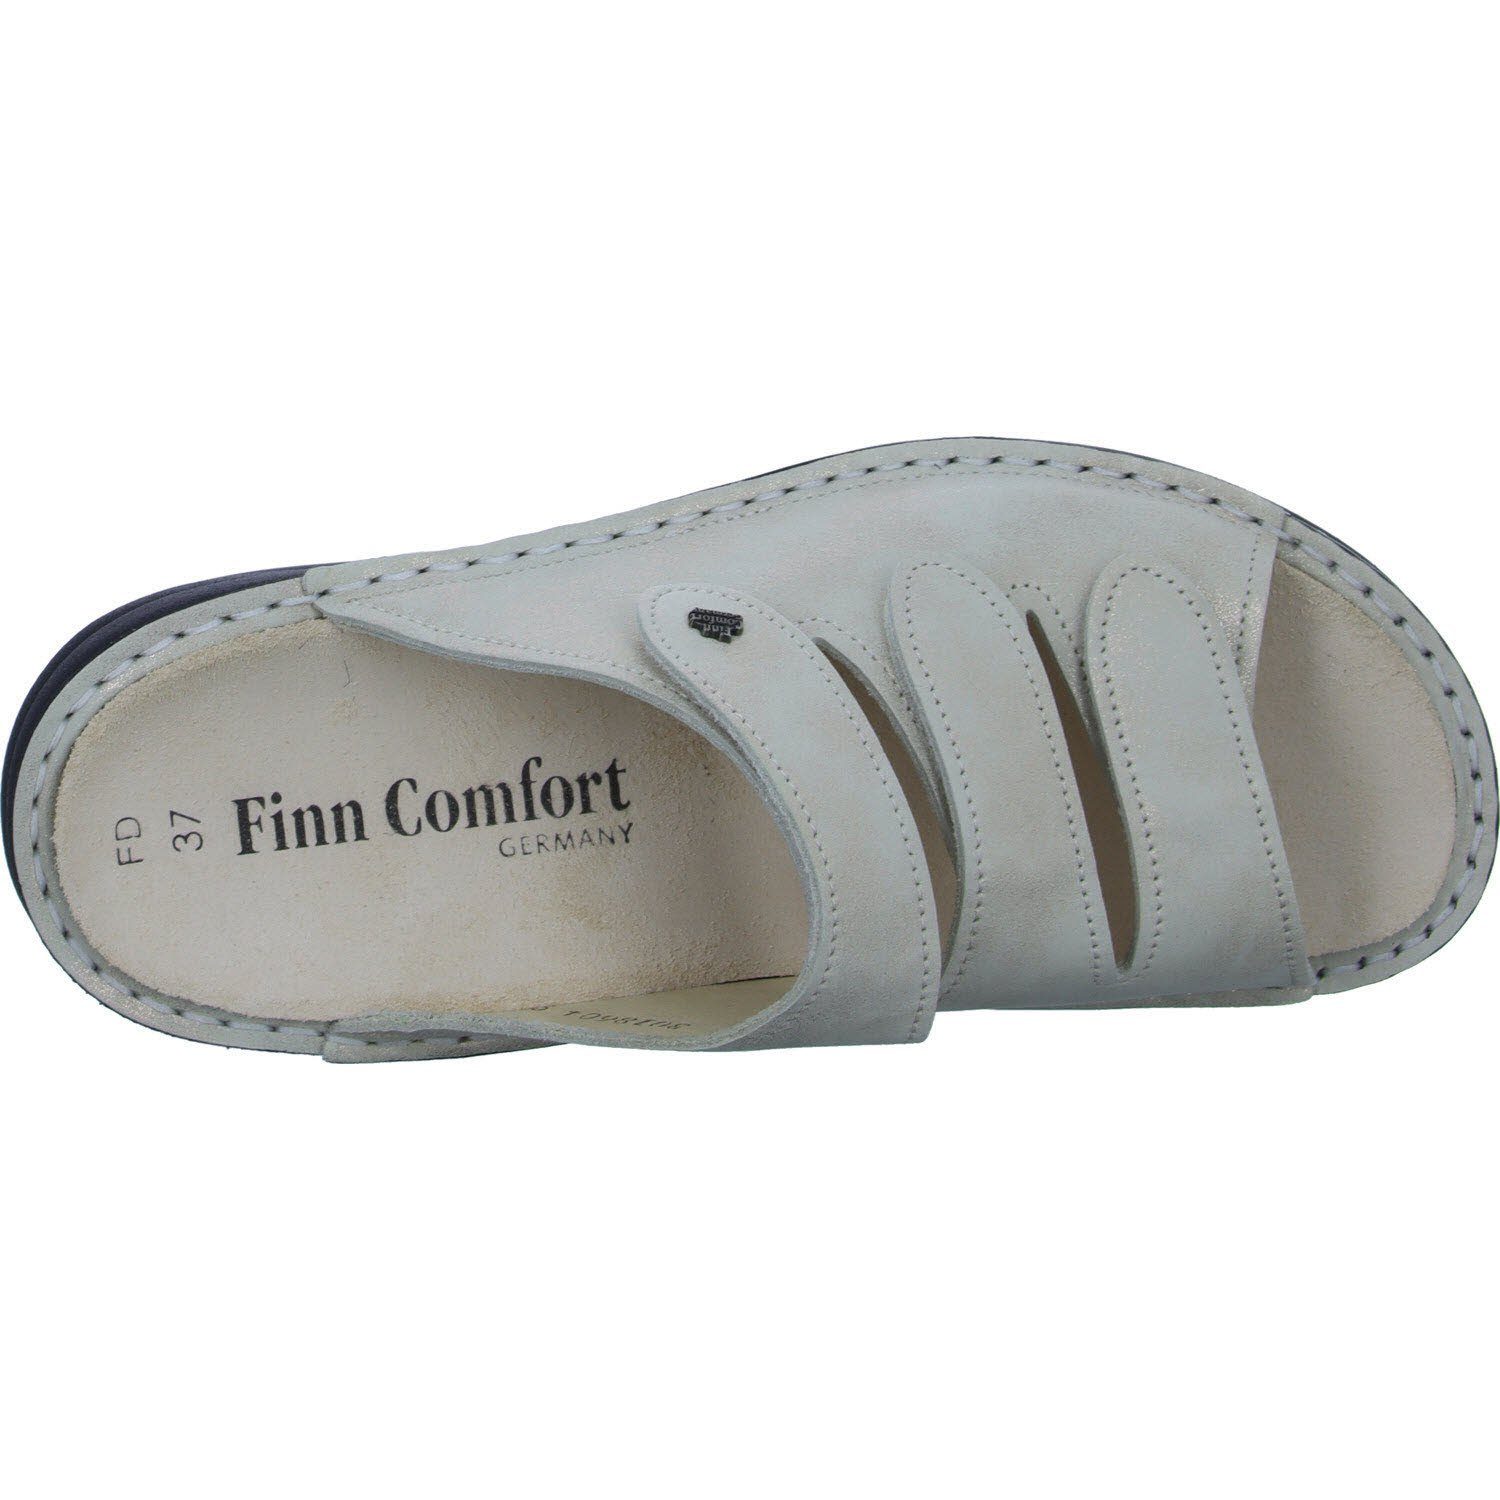 HELLAS Comfort Finn Pantolette